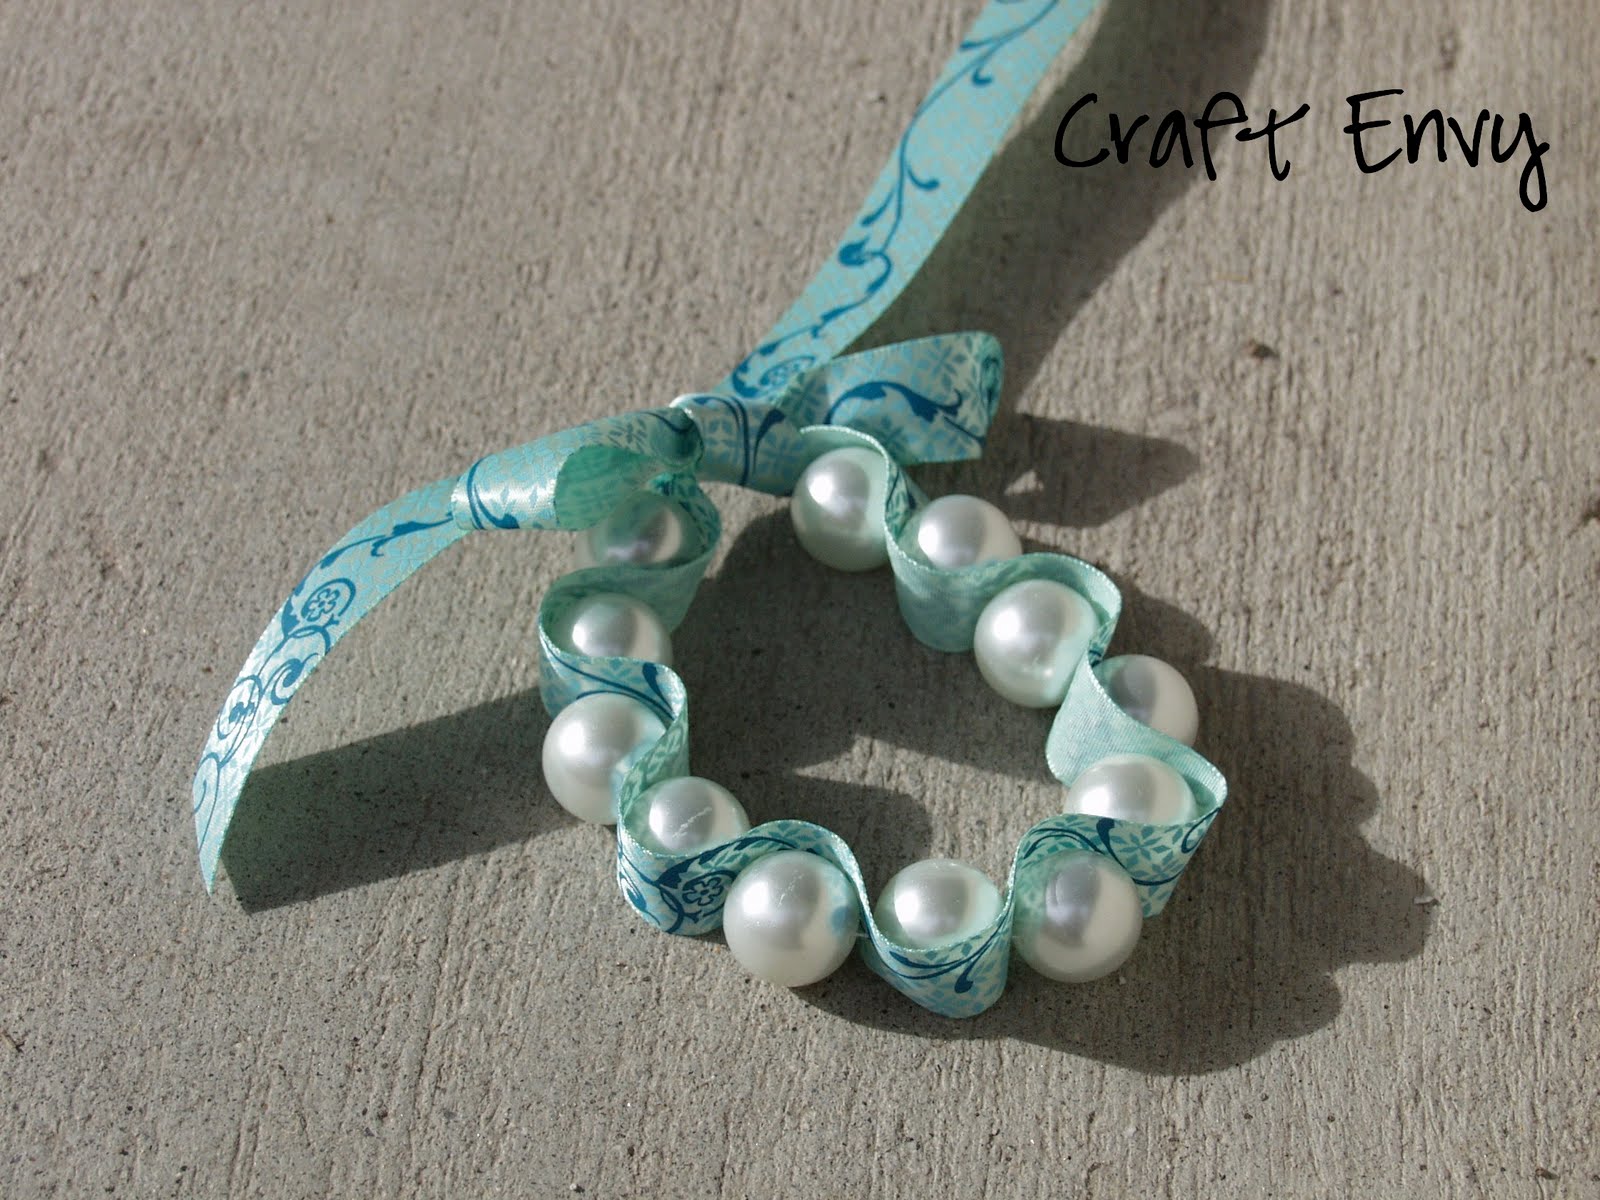 Craft Envy: Pearls and Ribbon Bracelet